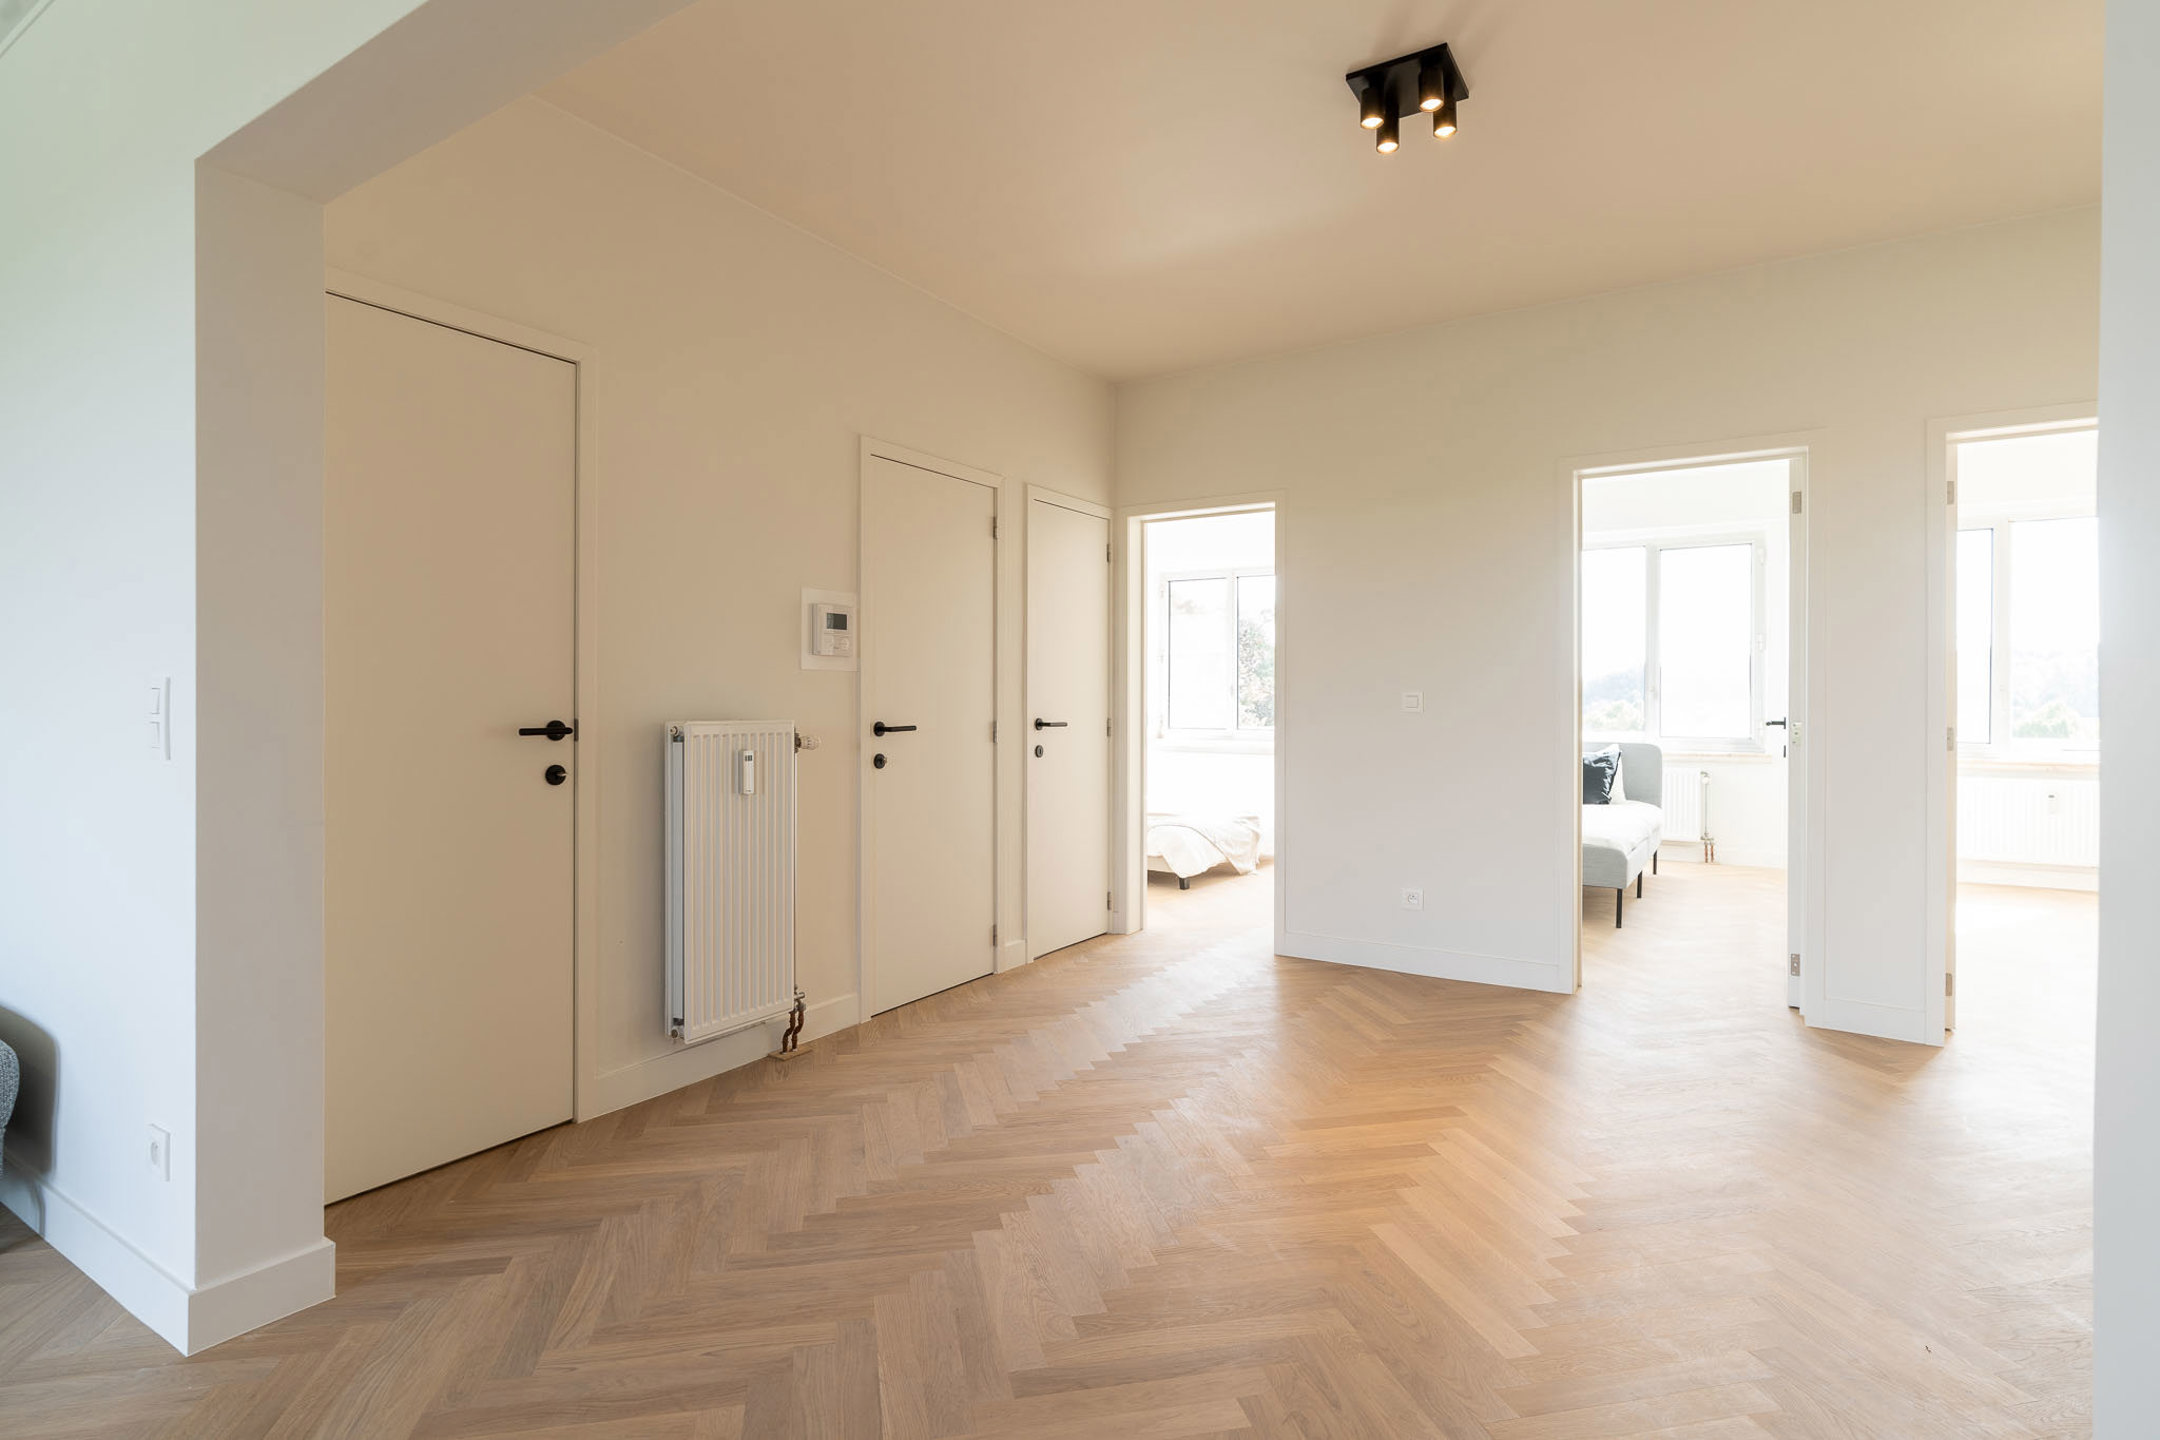 Boniverlei - 3 bedroom apartment for rent in Edegem